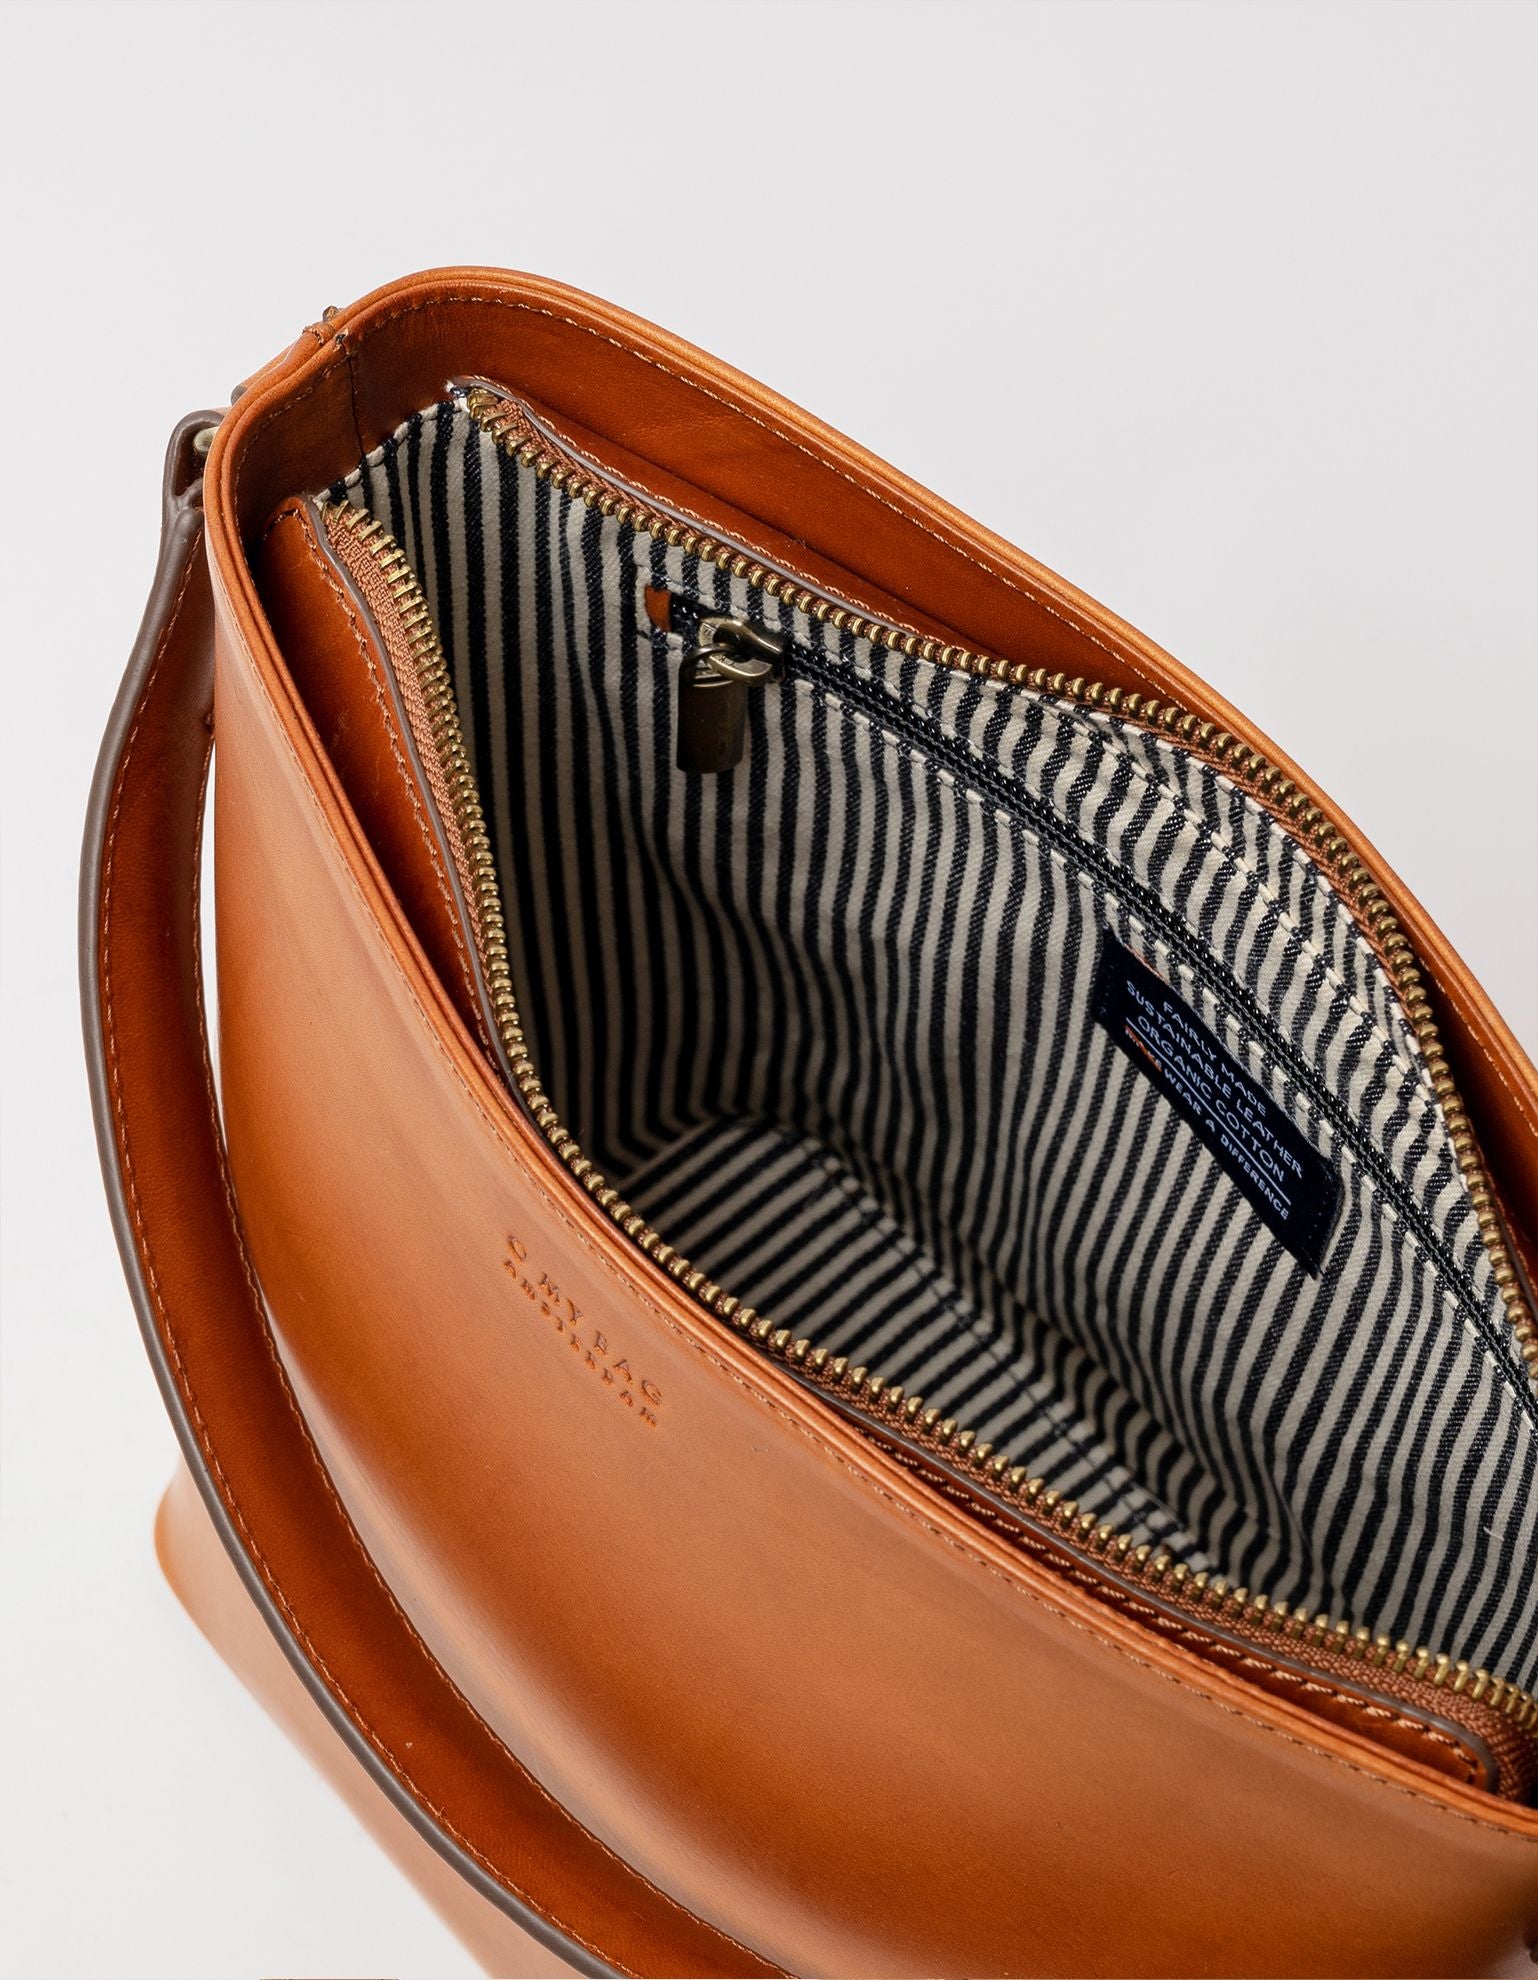 Bobbi Bucket Bag Maxi - Cognac Classic Leather